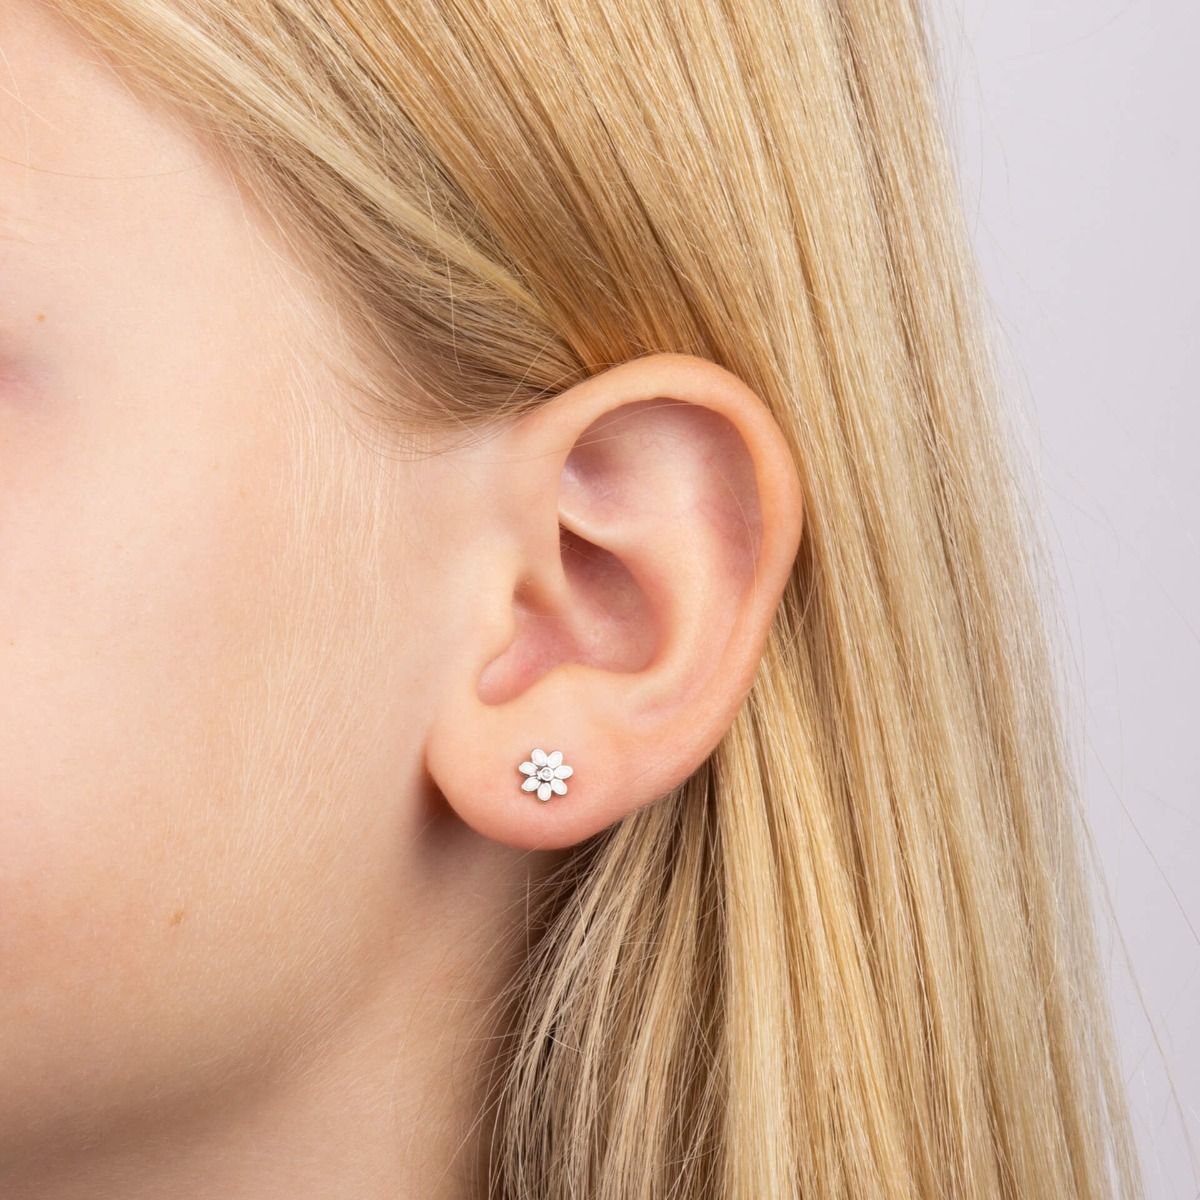 Children's Diamond Daisy Earrings with White Enamel Petals on Model's ear.